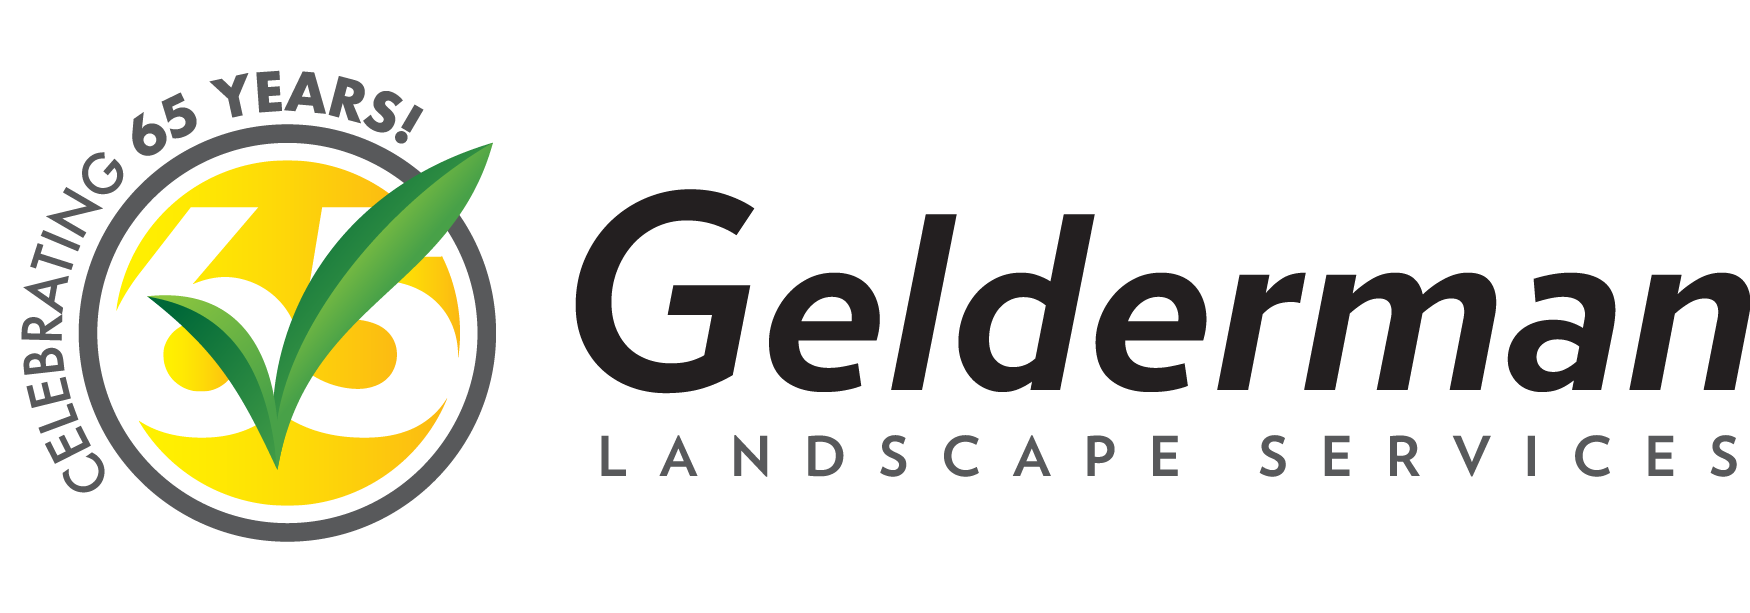 Gelderman Landscape Services